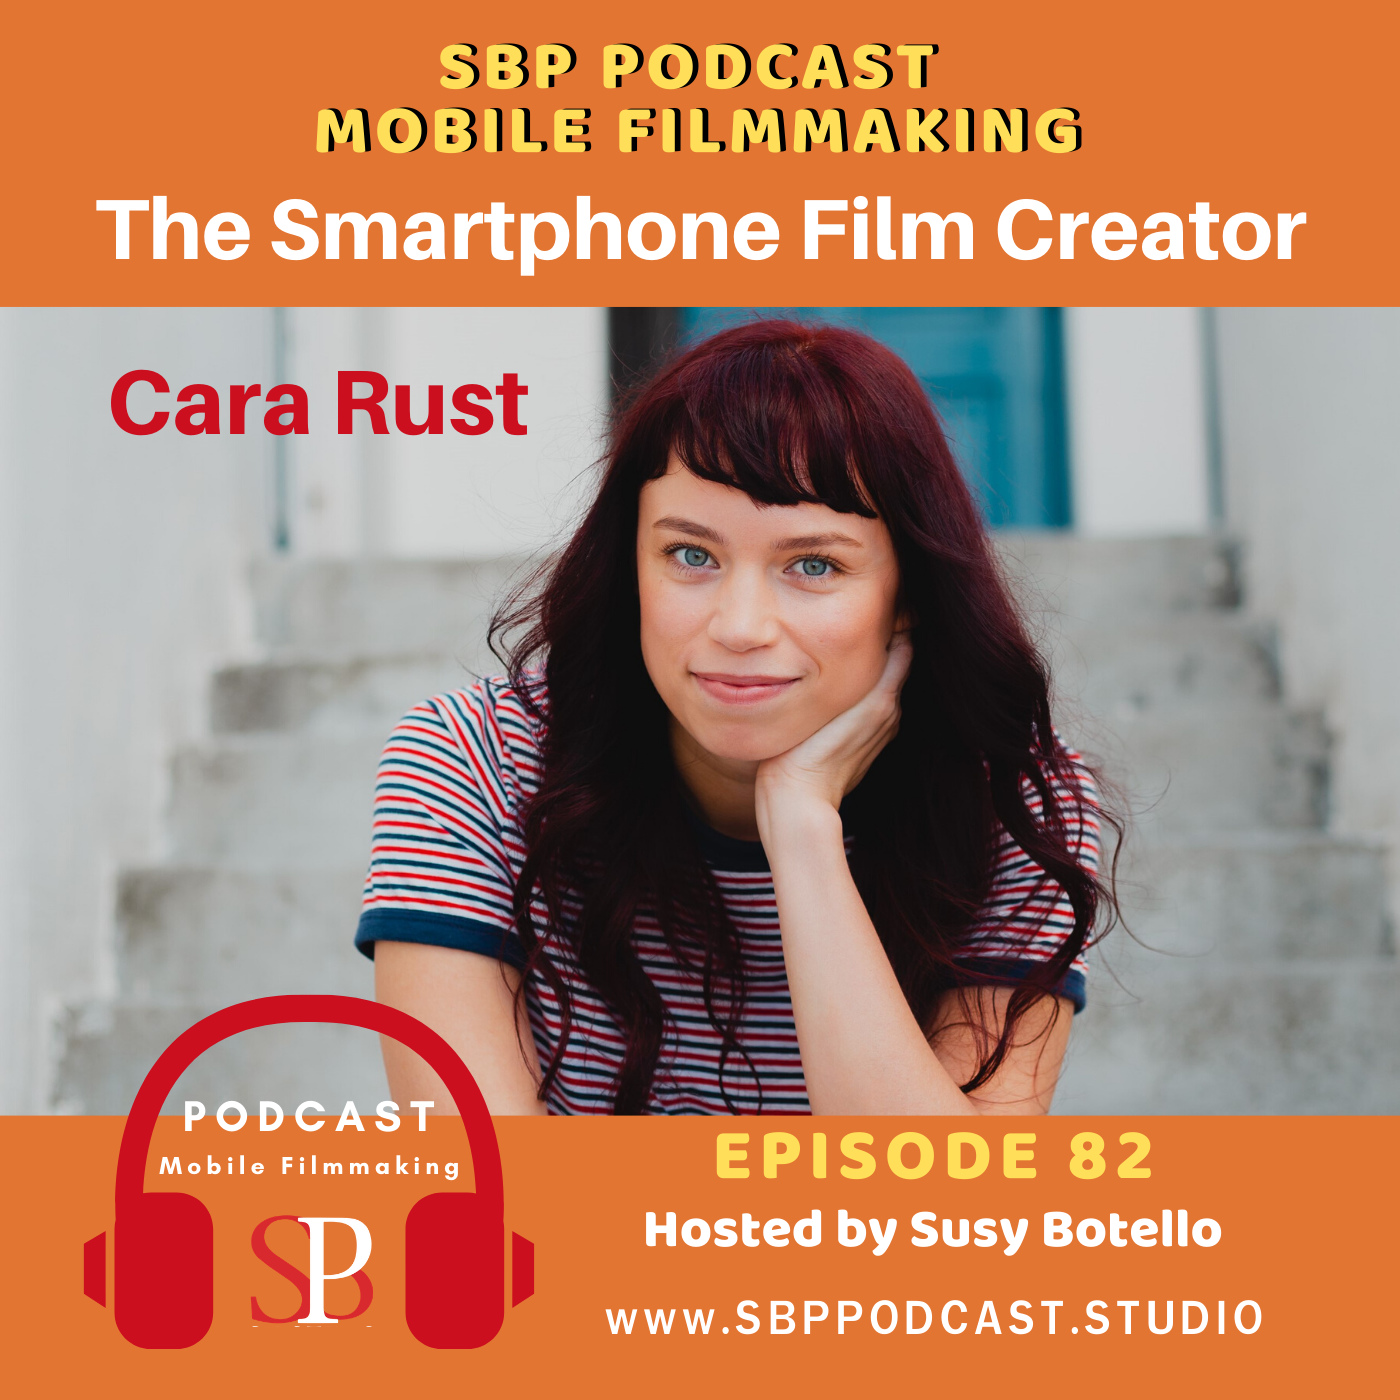 The Smartphone Film Creator with Cara Rust